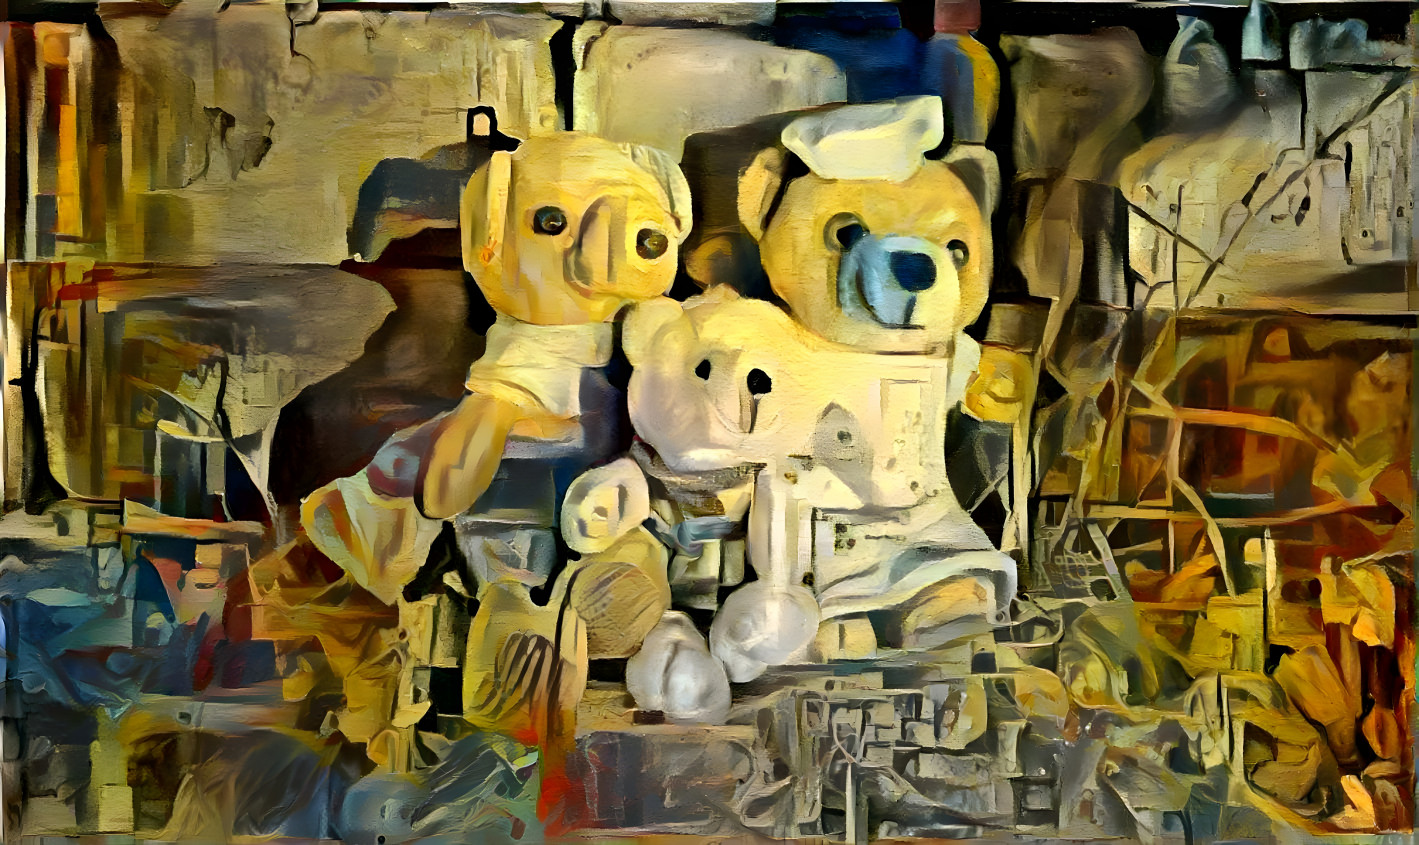 Teddy bears' picnic